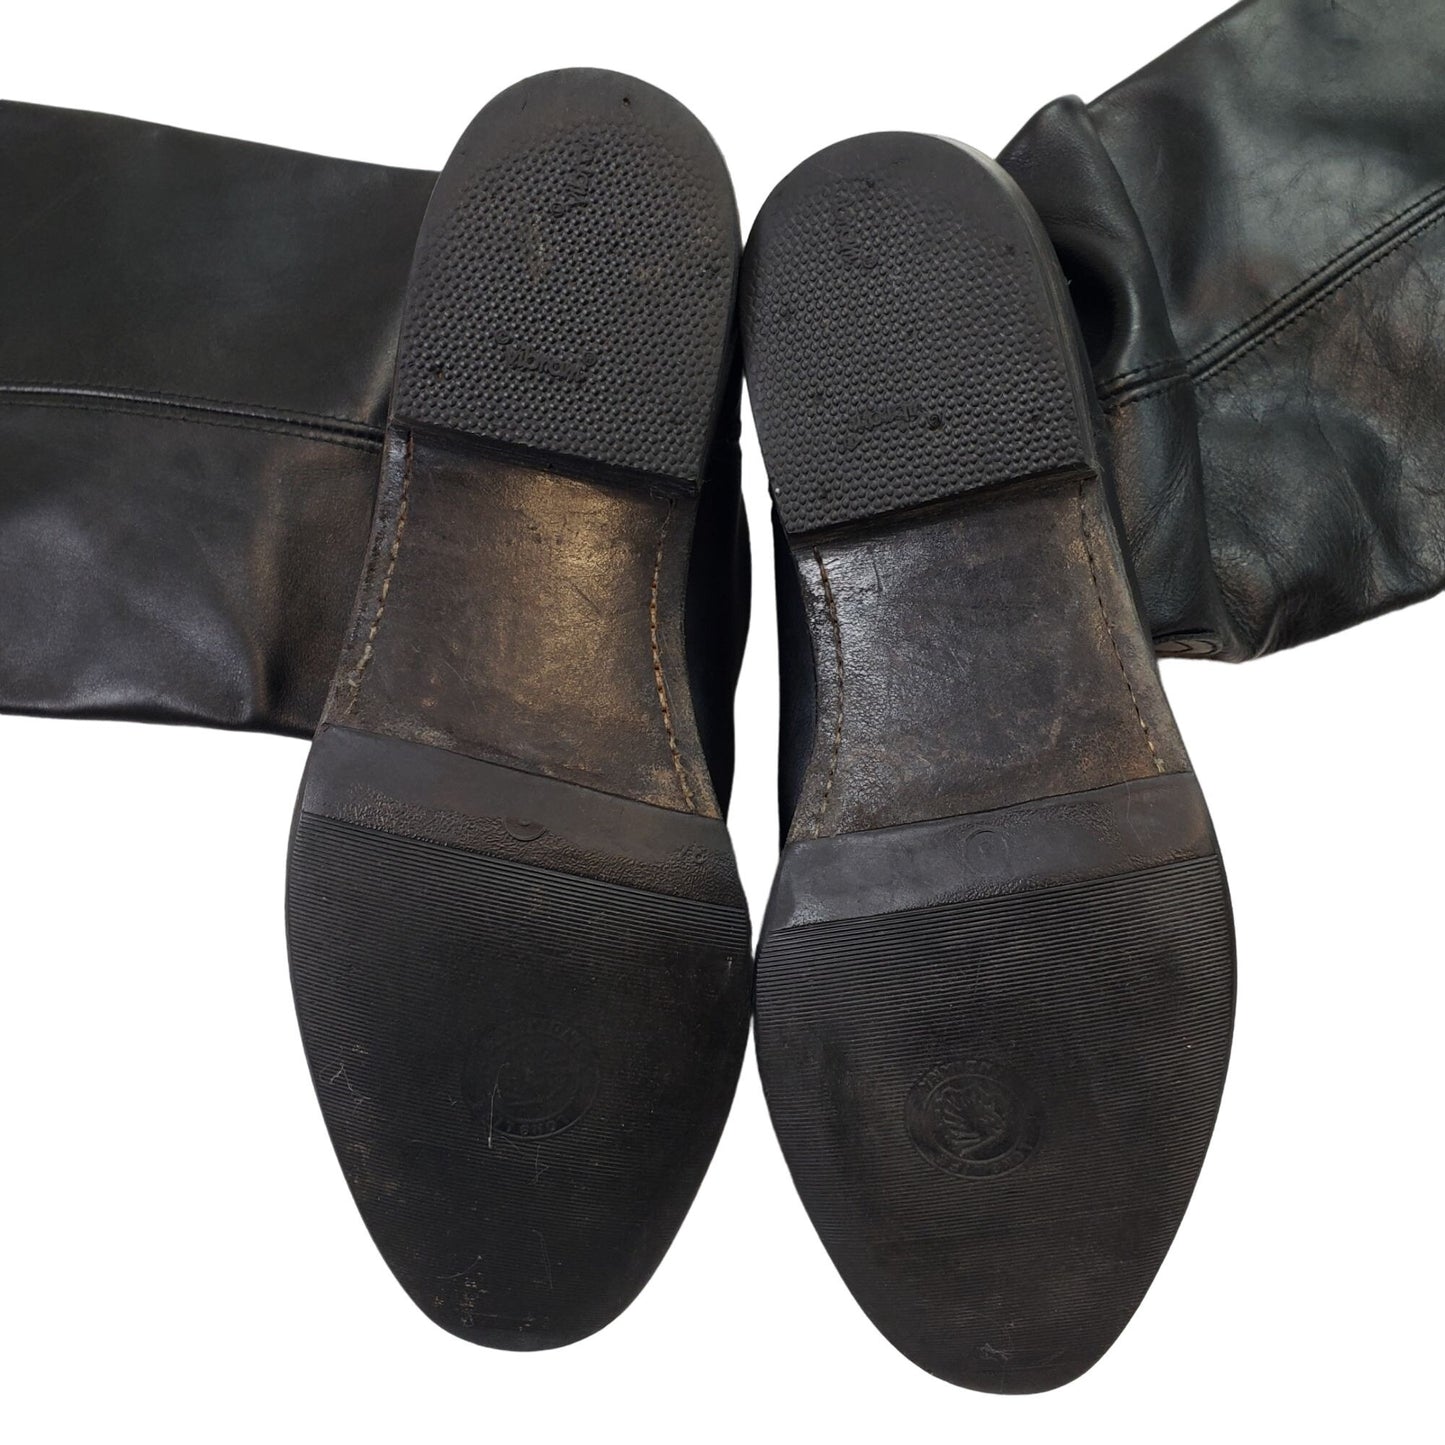 Frye Black Leather Knee High Boots Size 3 UK (Size 5 US)